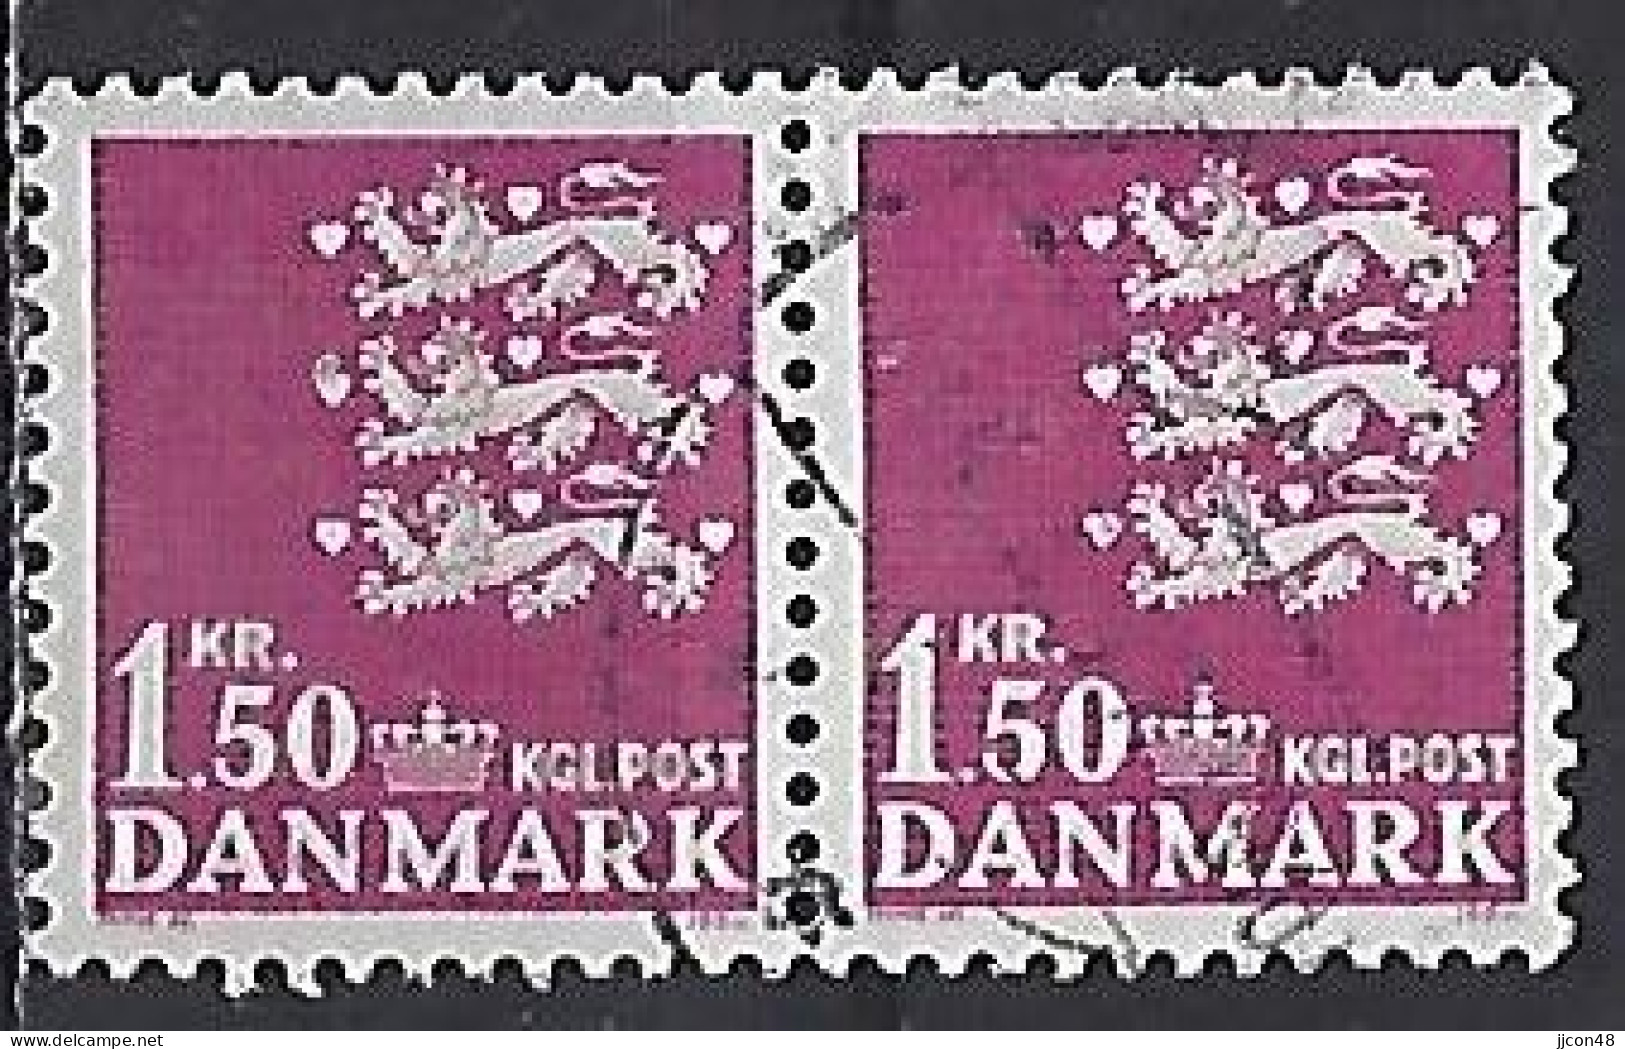 Denmark 1962  Three Lions (o) Mi.402 Y - Gebruikt